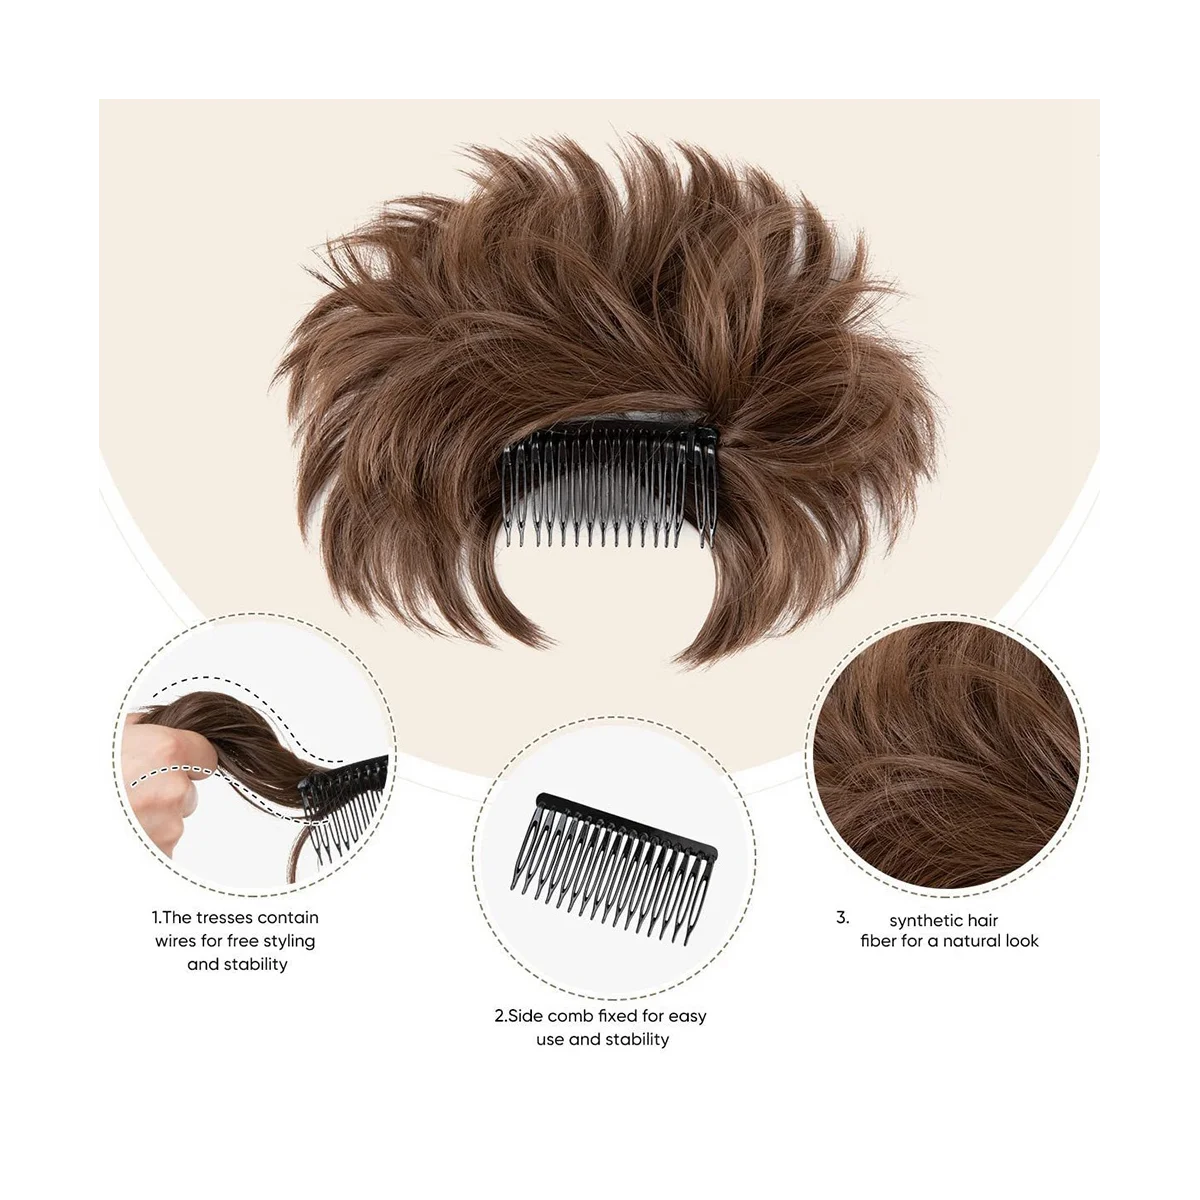 Hiasan rambut cepol berantakan, klip sisir samping dalam rambut cepol rumbai, hiasan rambut Updo untuk wanita dapat diatur